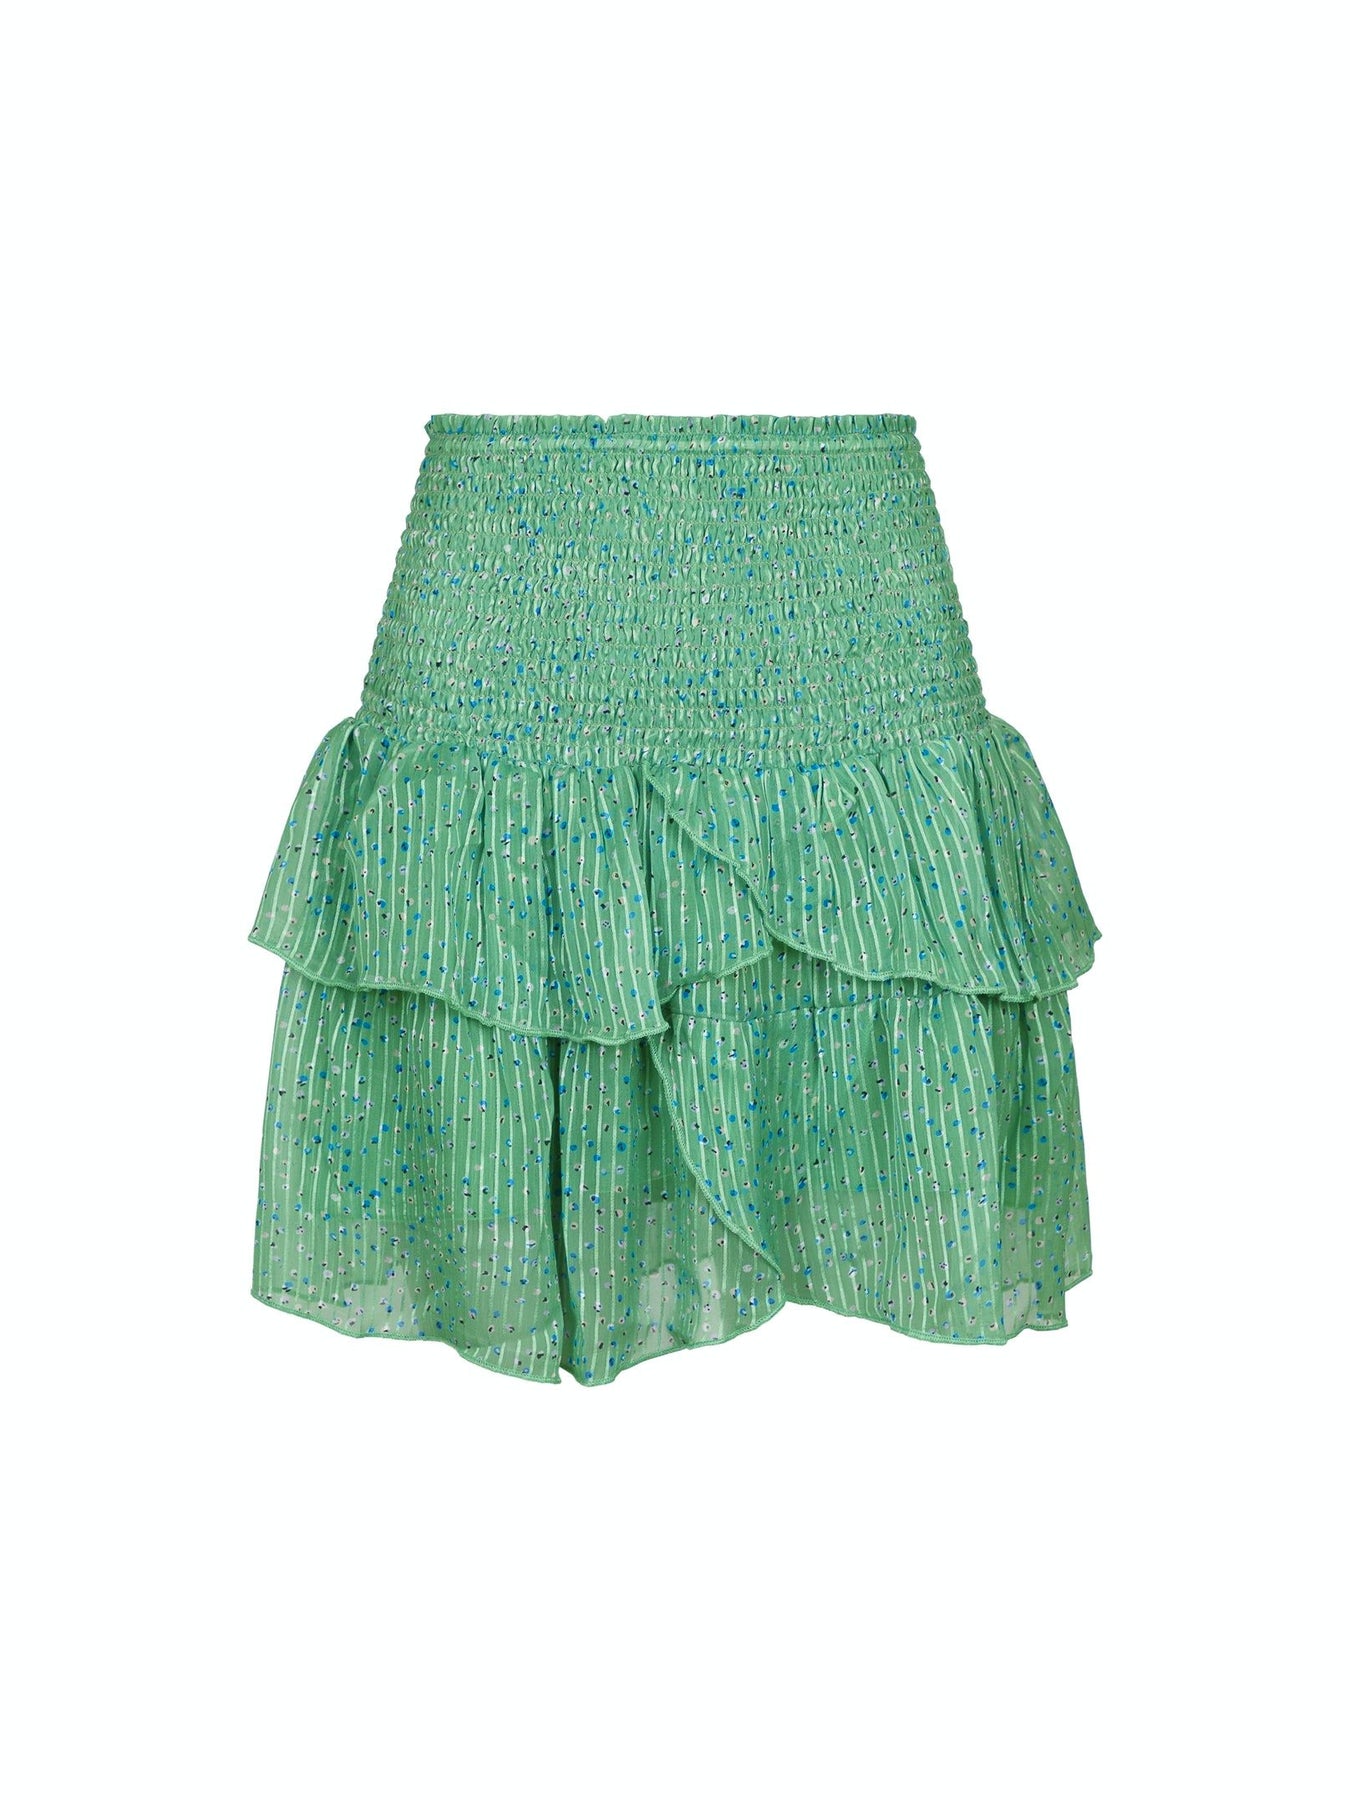 Carin Sparkle Skirt - Green